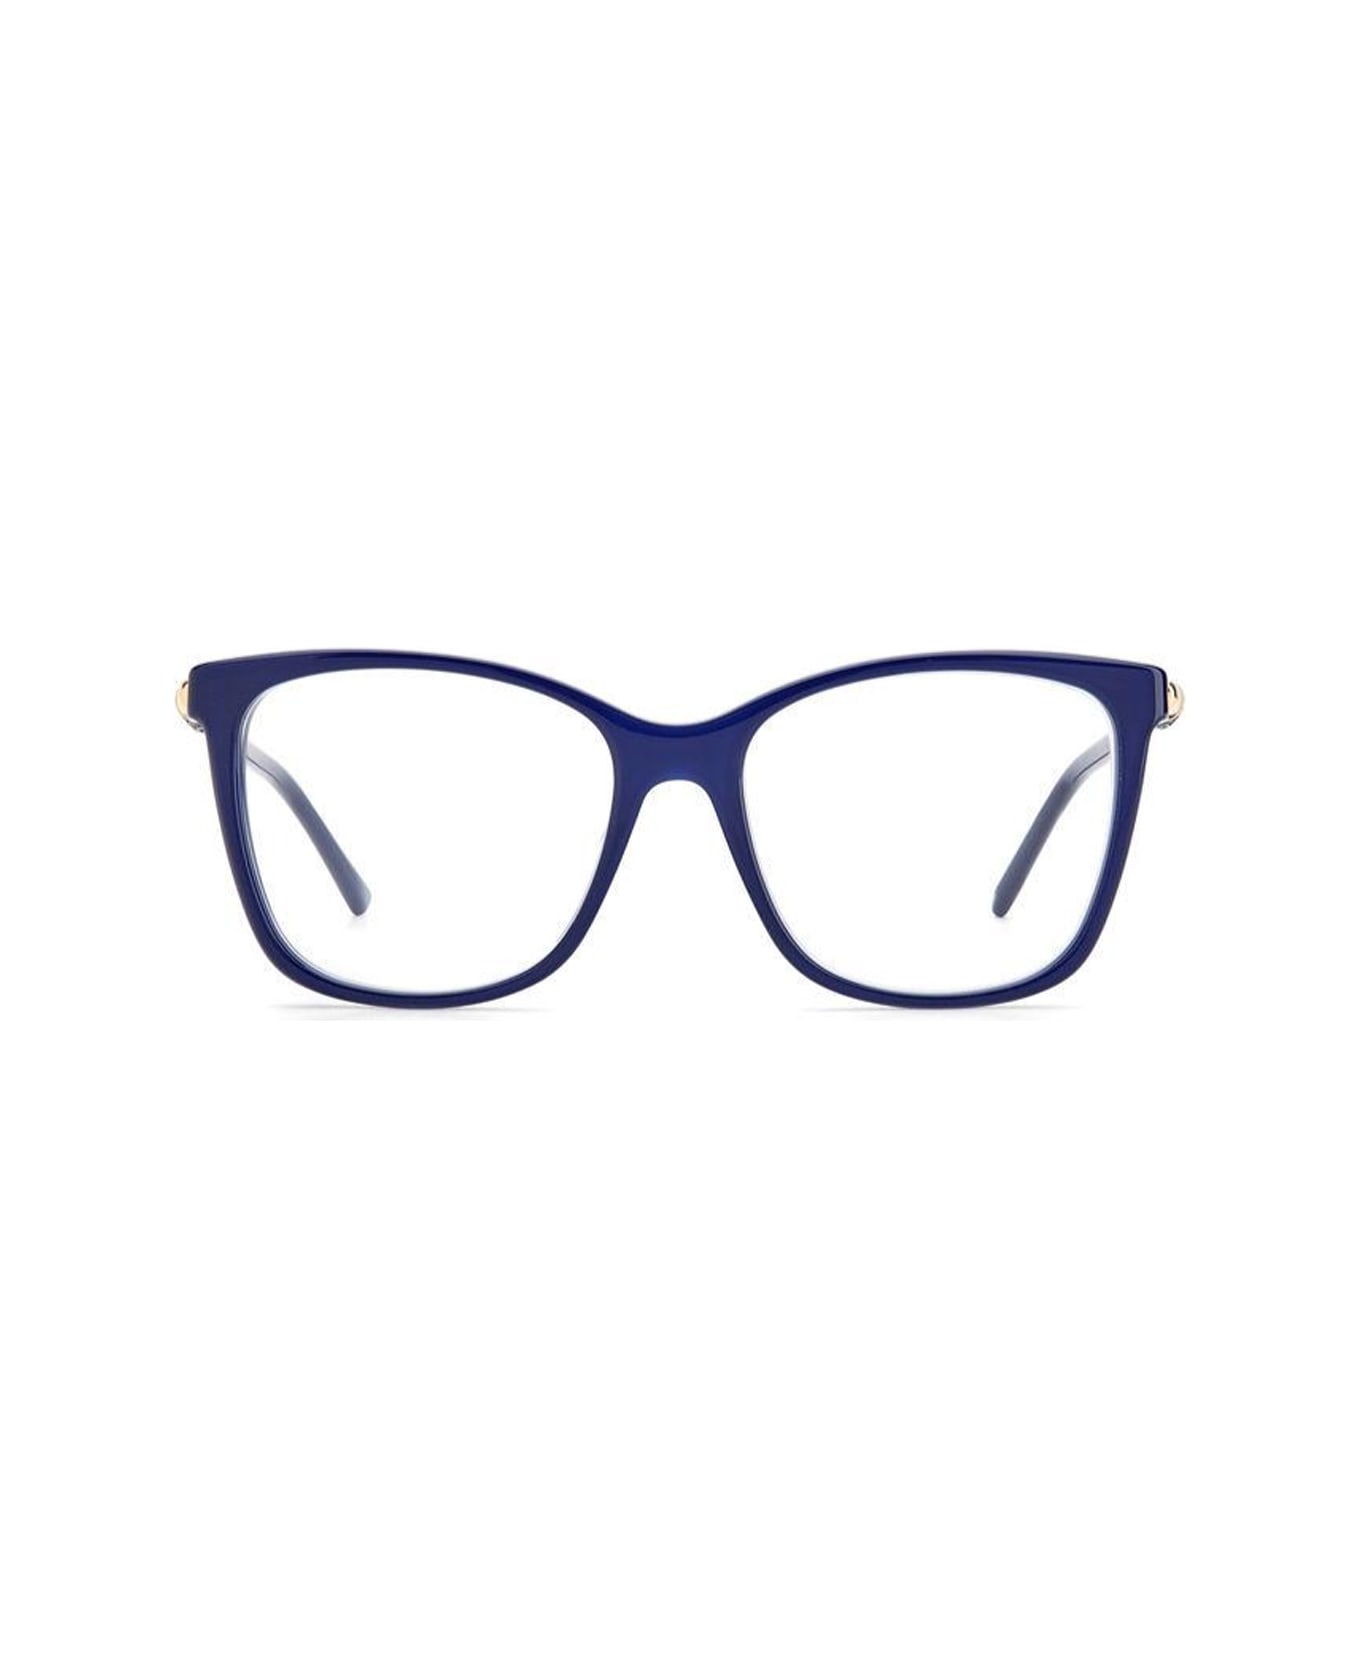 Jimmy Choo Eyewear Jc294/g Qm4/17 Glasses - Blu